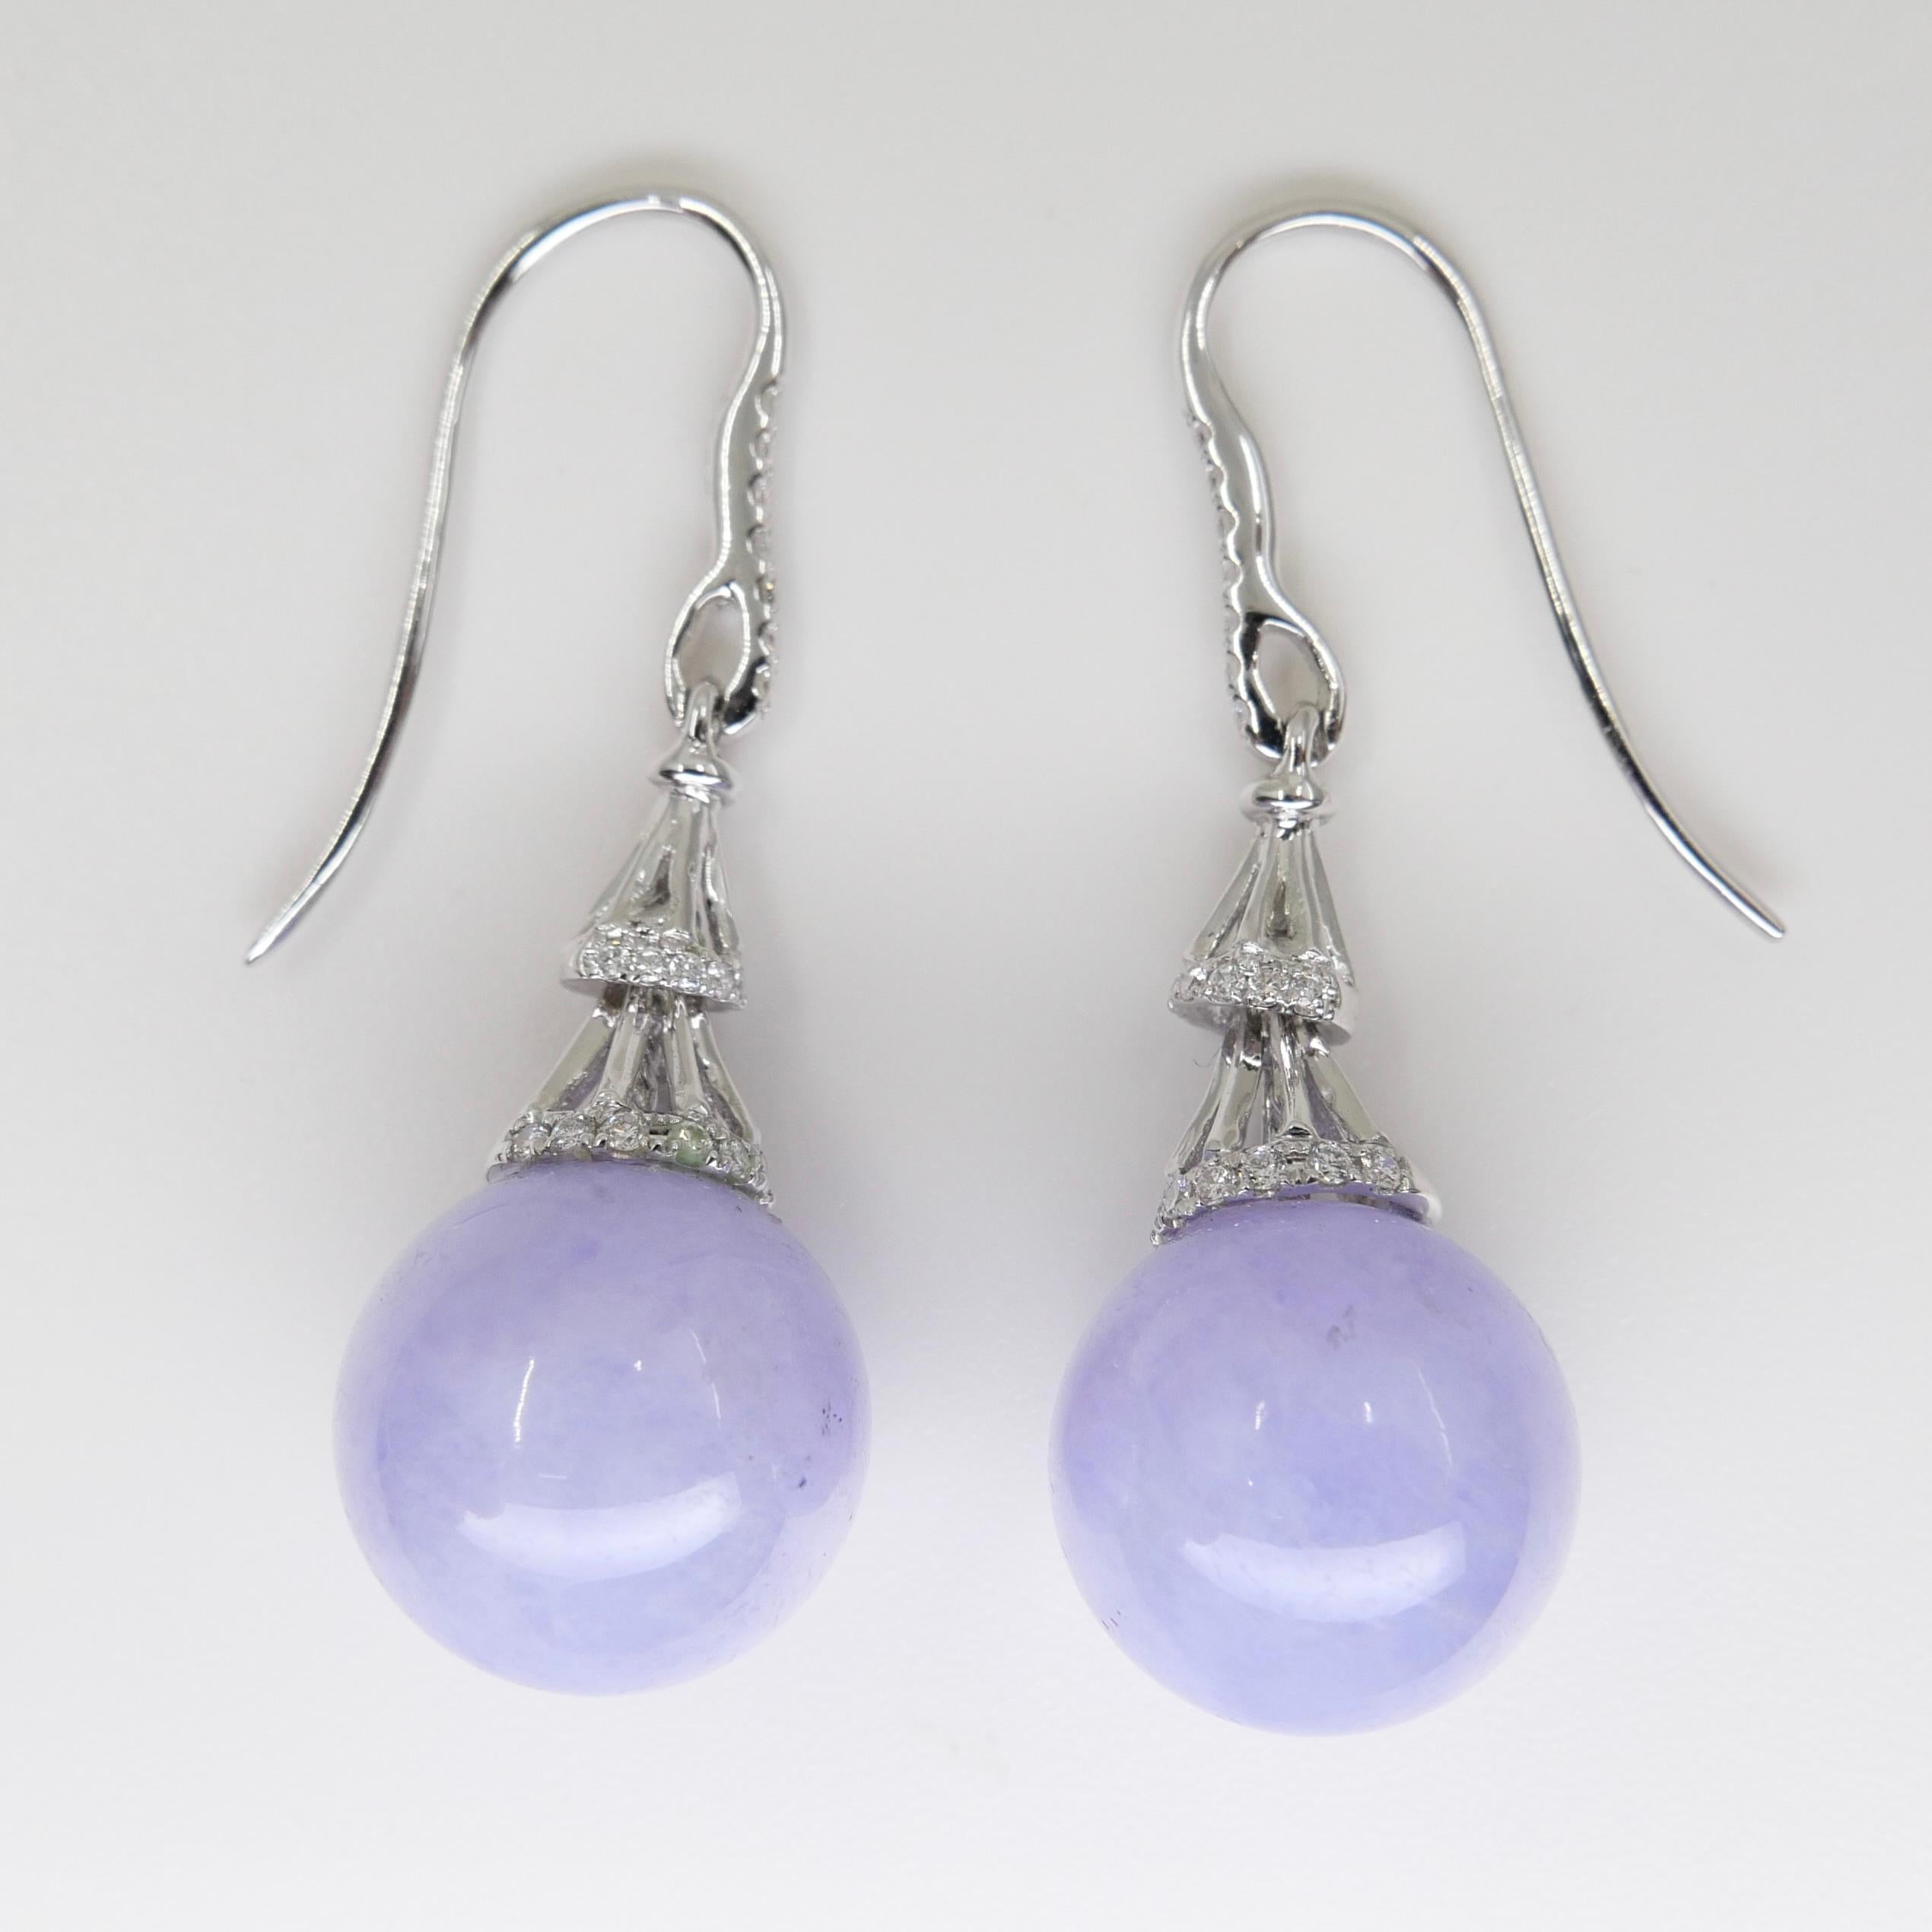 Certified Natural Lavender Jade Beads & Diamond Drop Earrings. Exquisite. 3